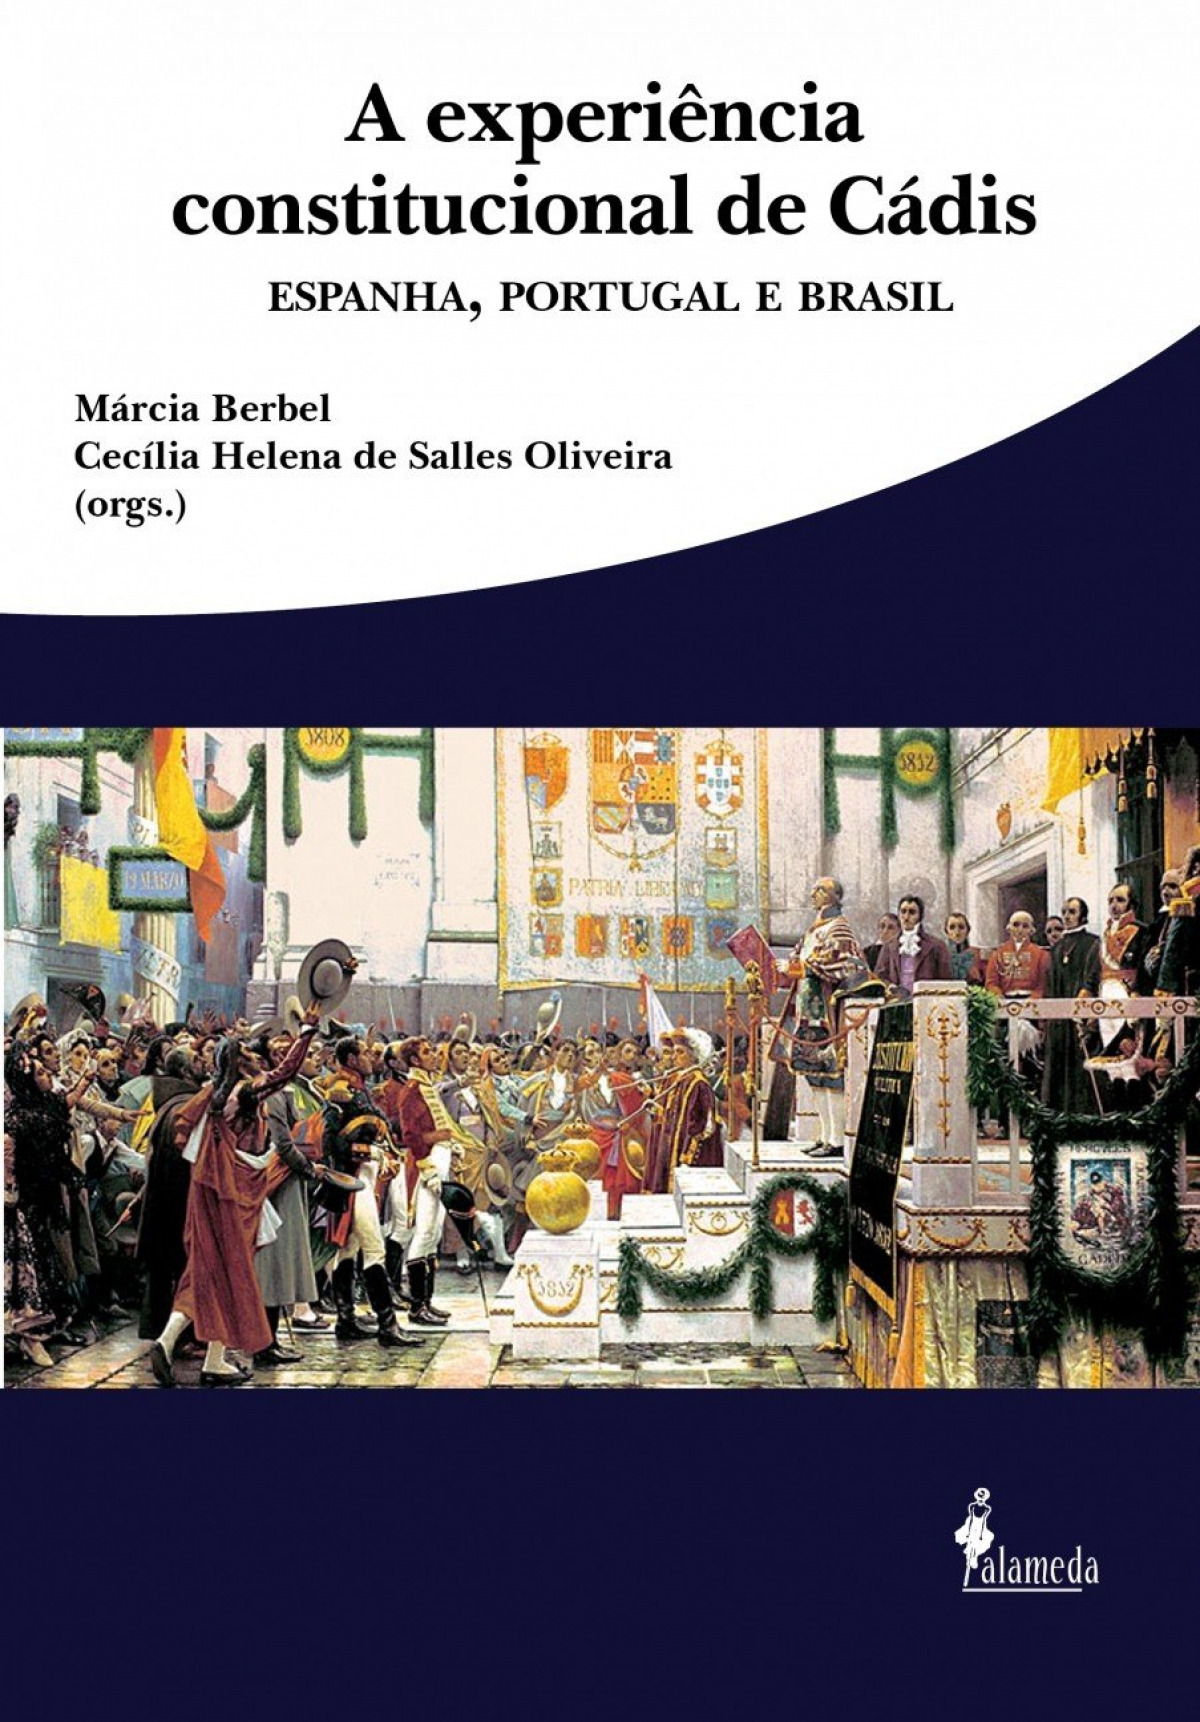 A experiˆncia constitucional de Cádis - Marcia Berbel e Cecilia Helena de Salles